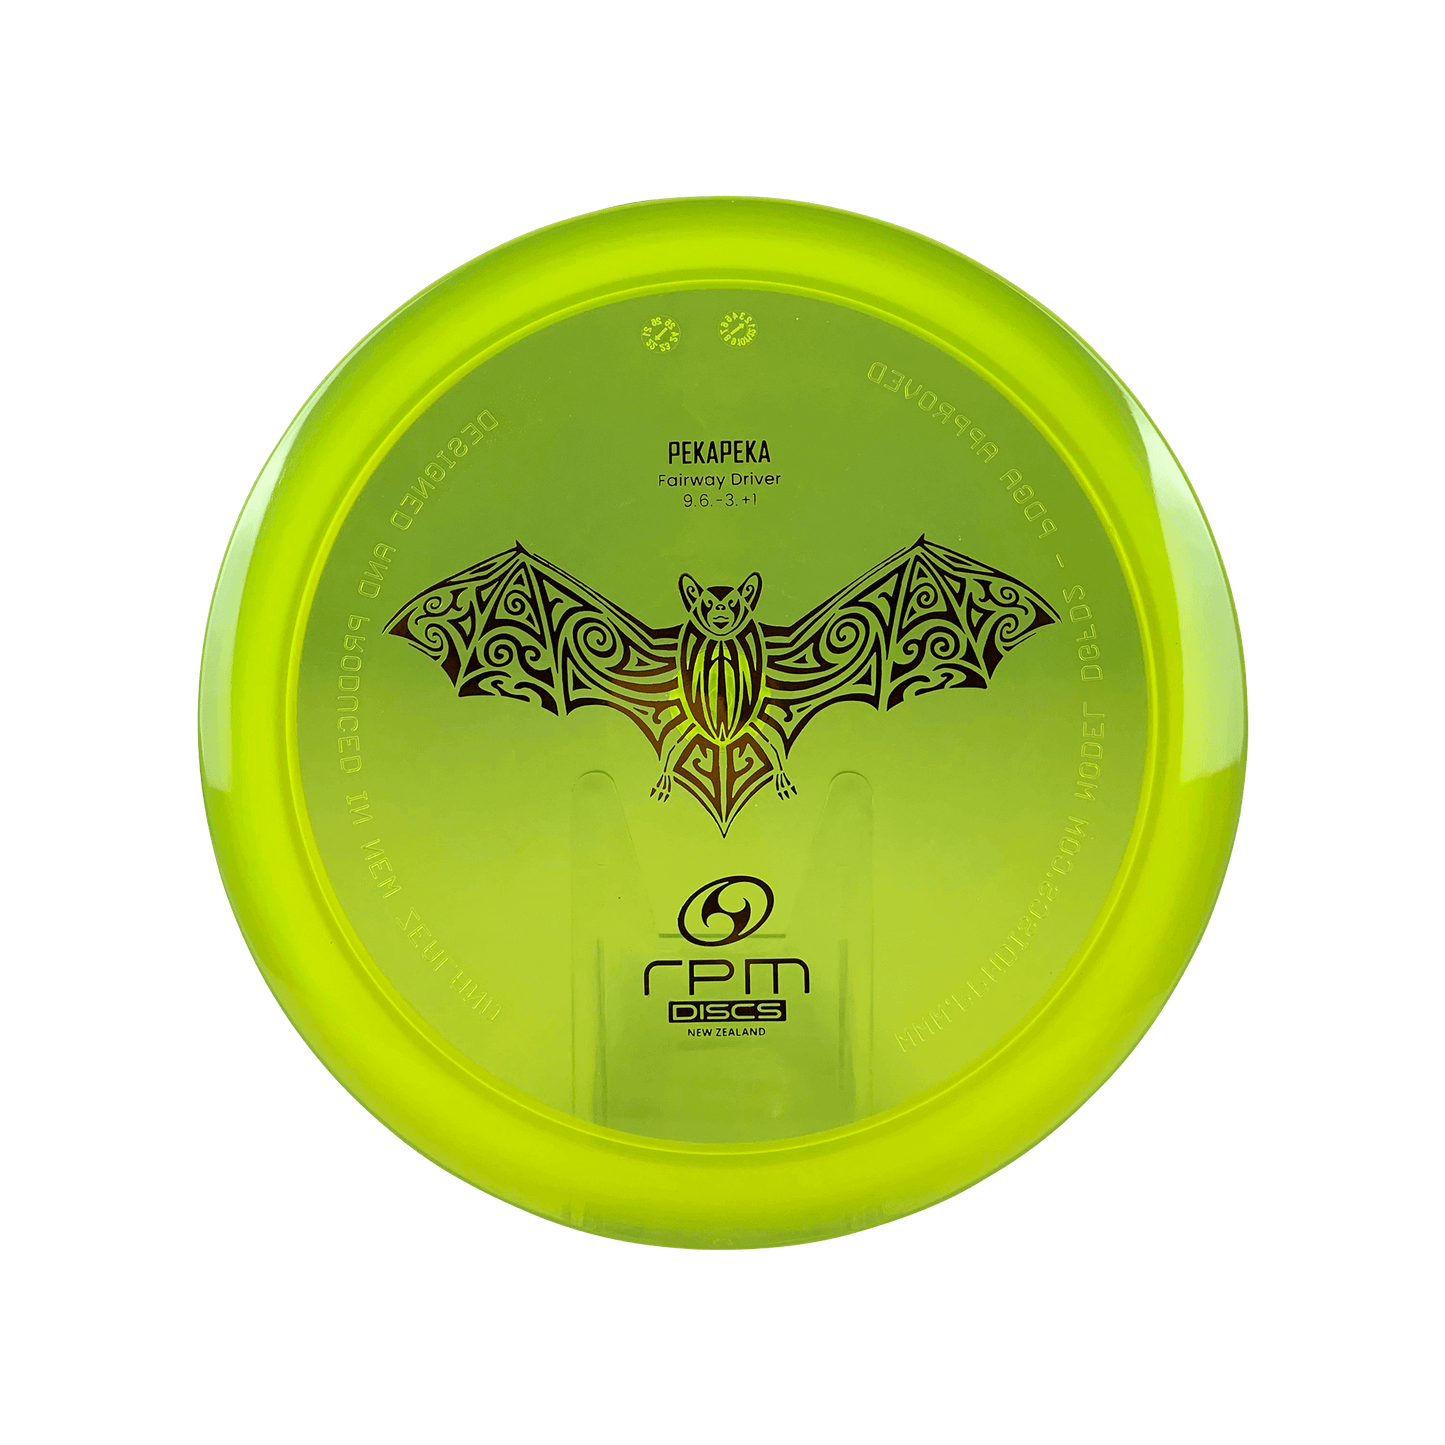 Cosmic Pekapeka Disc RPM Discs yellow 174 